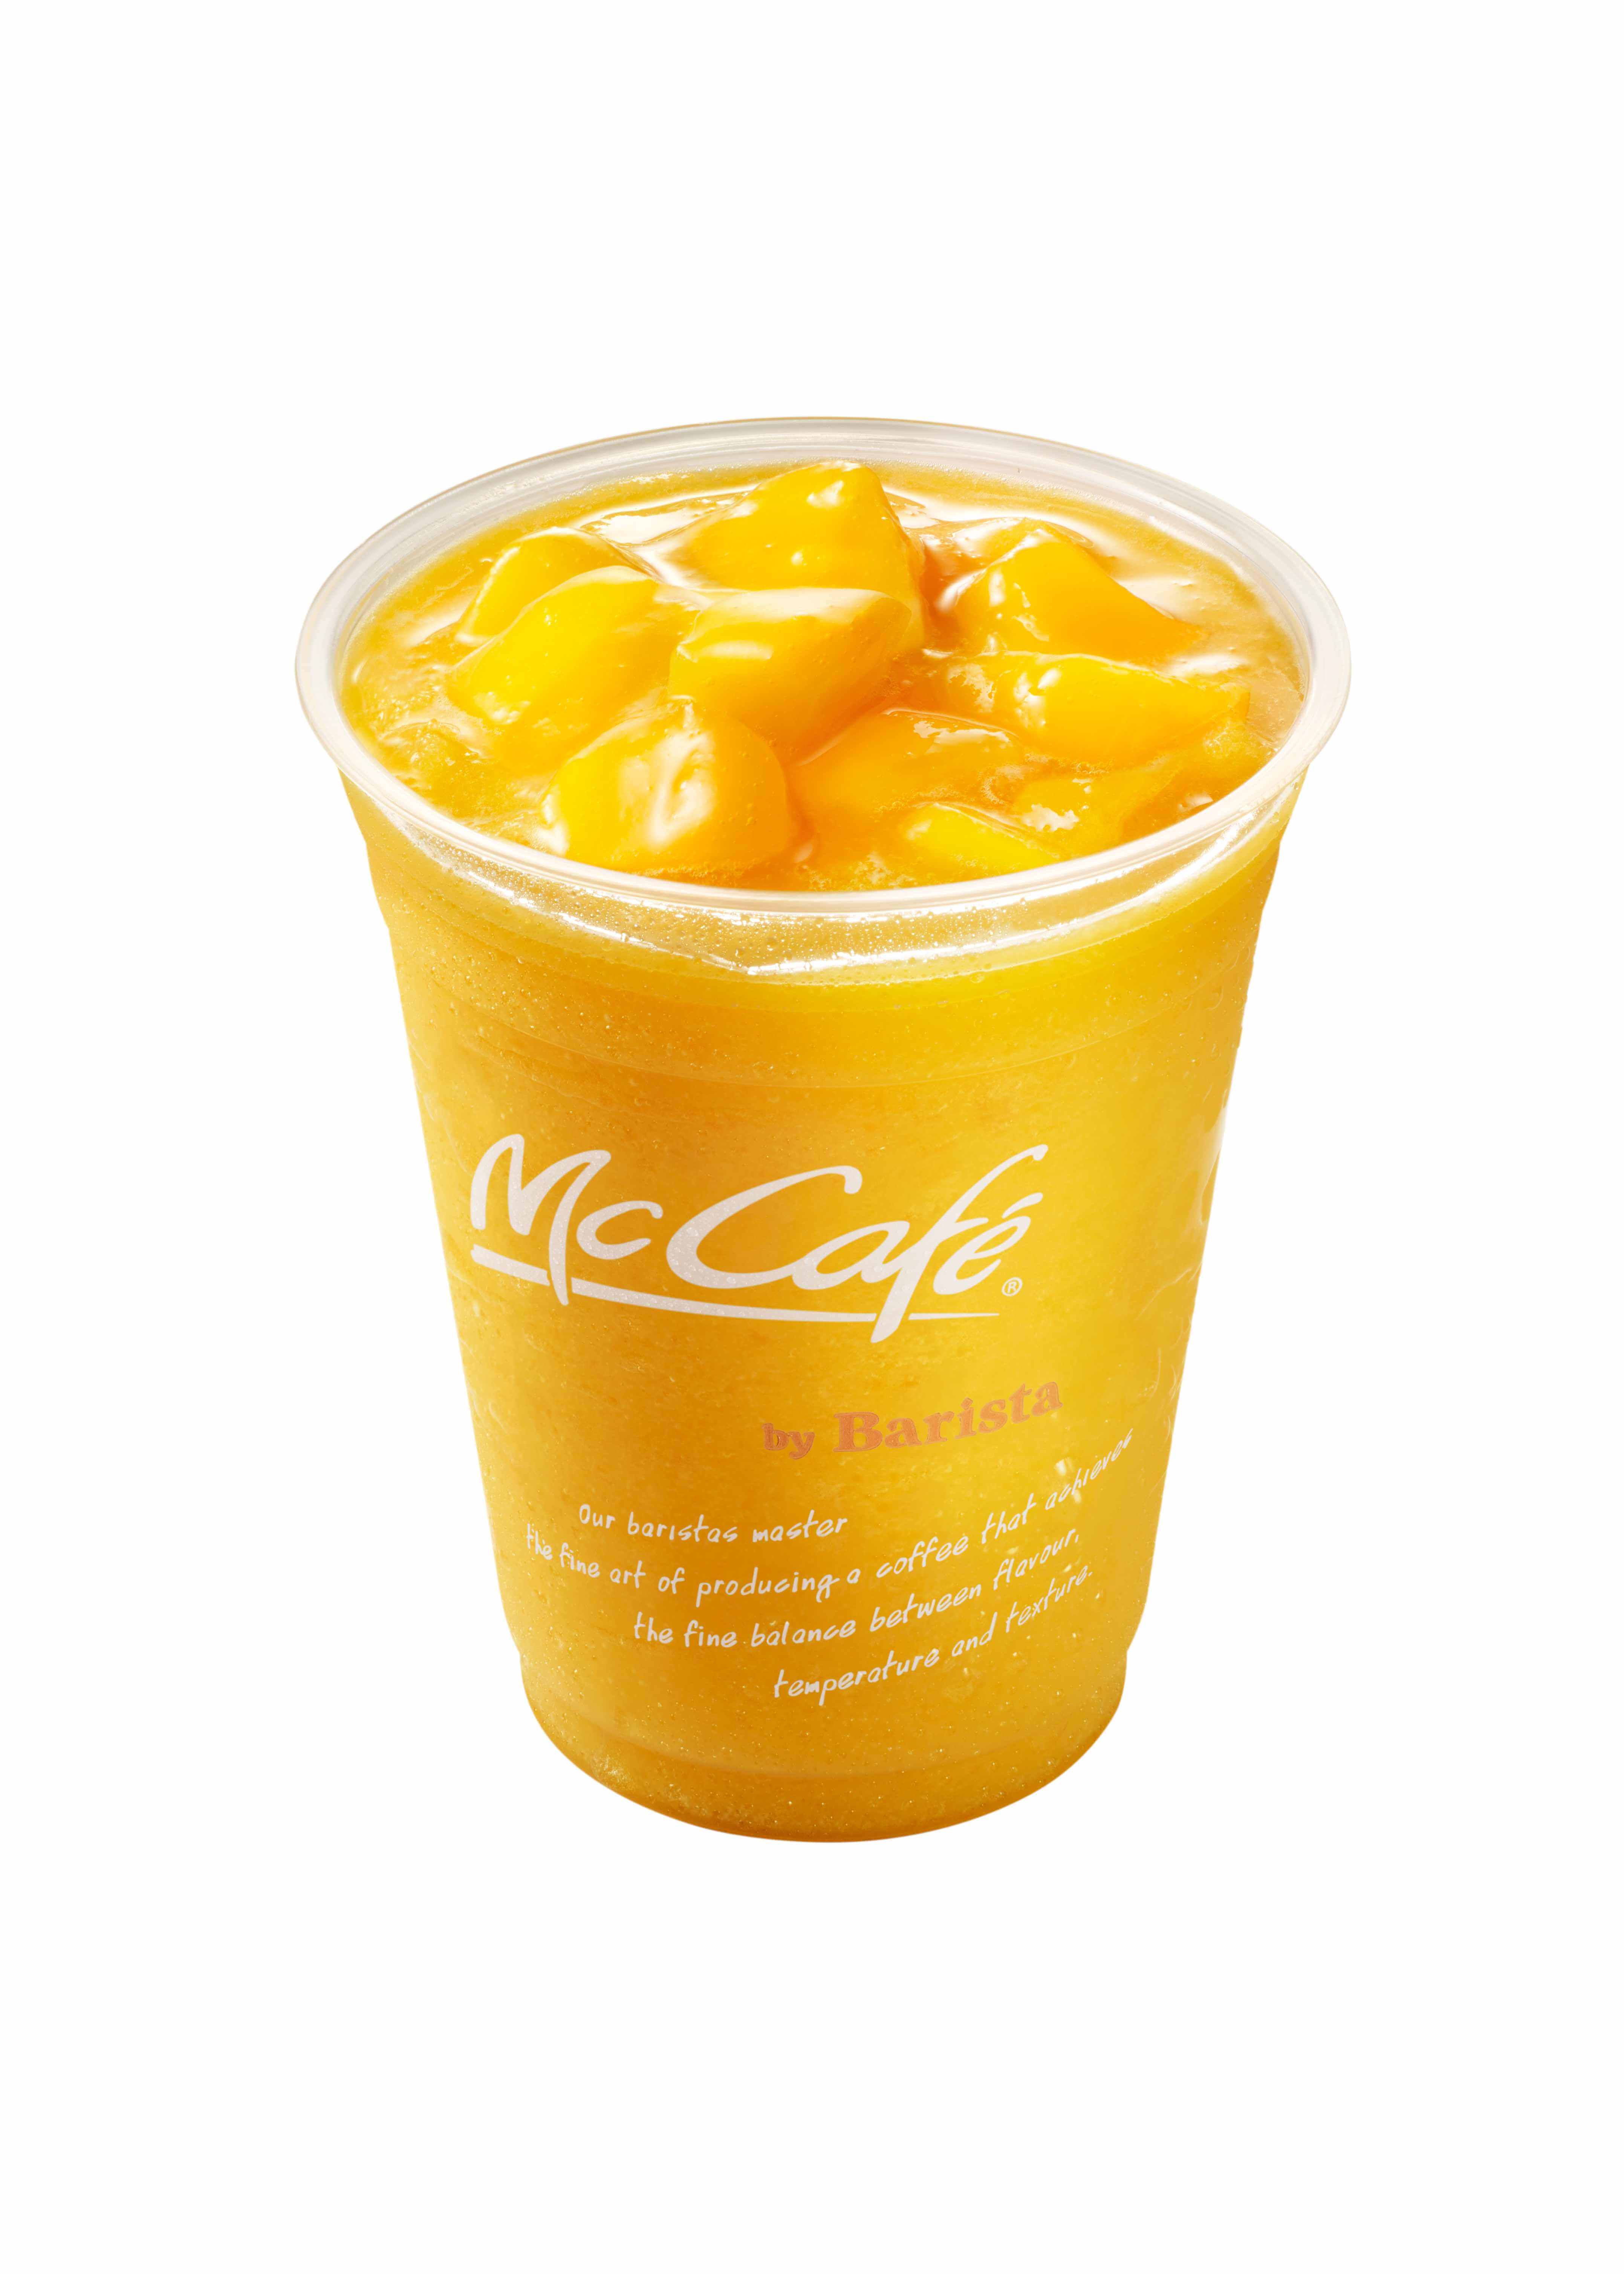 mccafe mcdonald バリスタ「マンゴー&パッションフルーツスムージー」 mango pashion fruits smootie